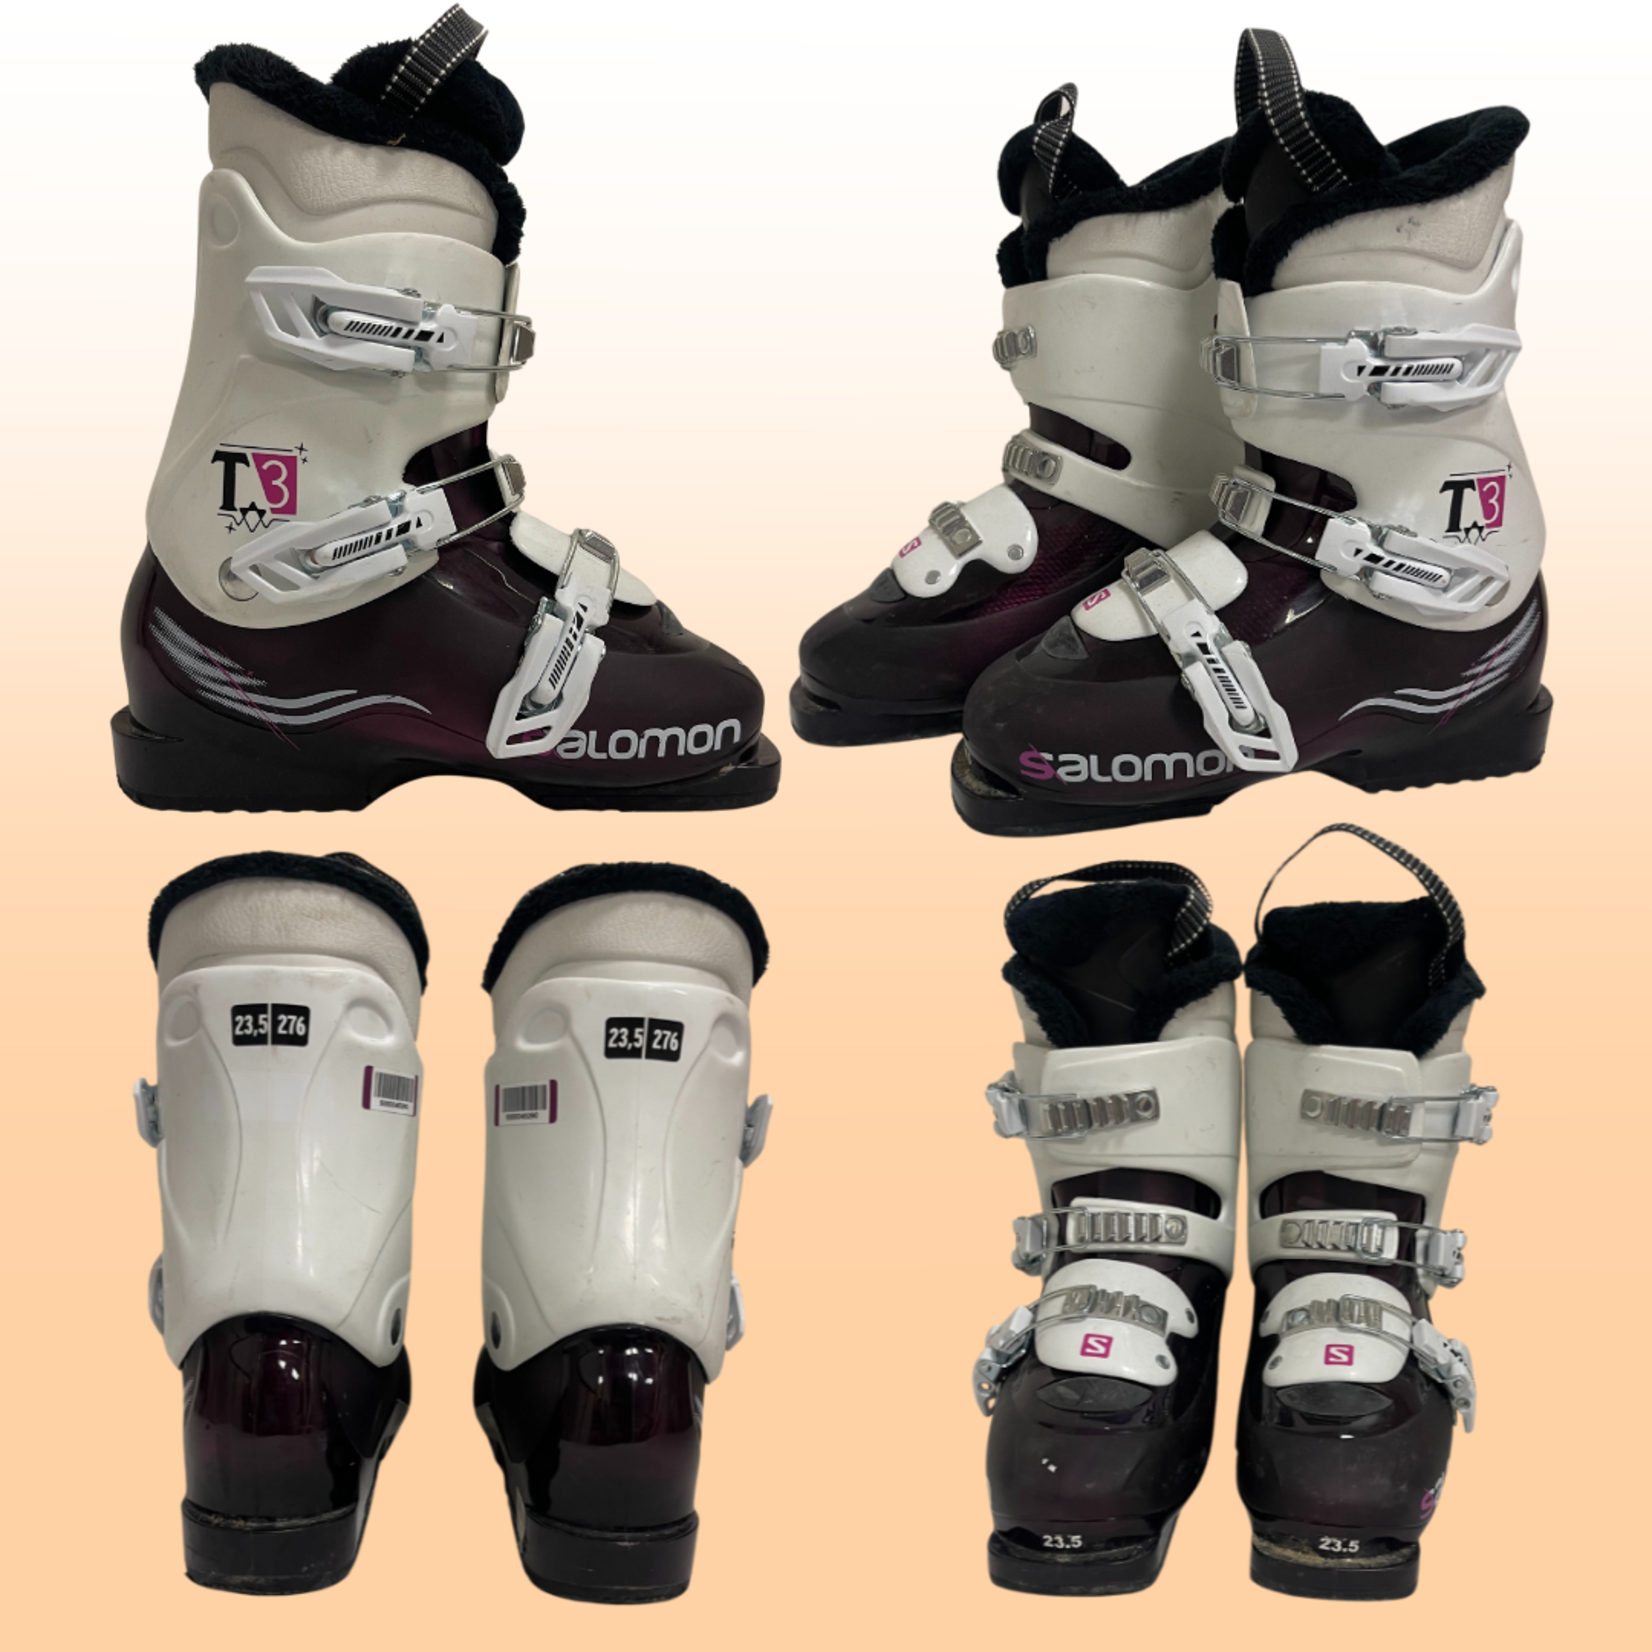 Salomon Salomon T3 Girls Ski Boots, Size 23.5